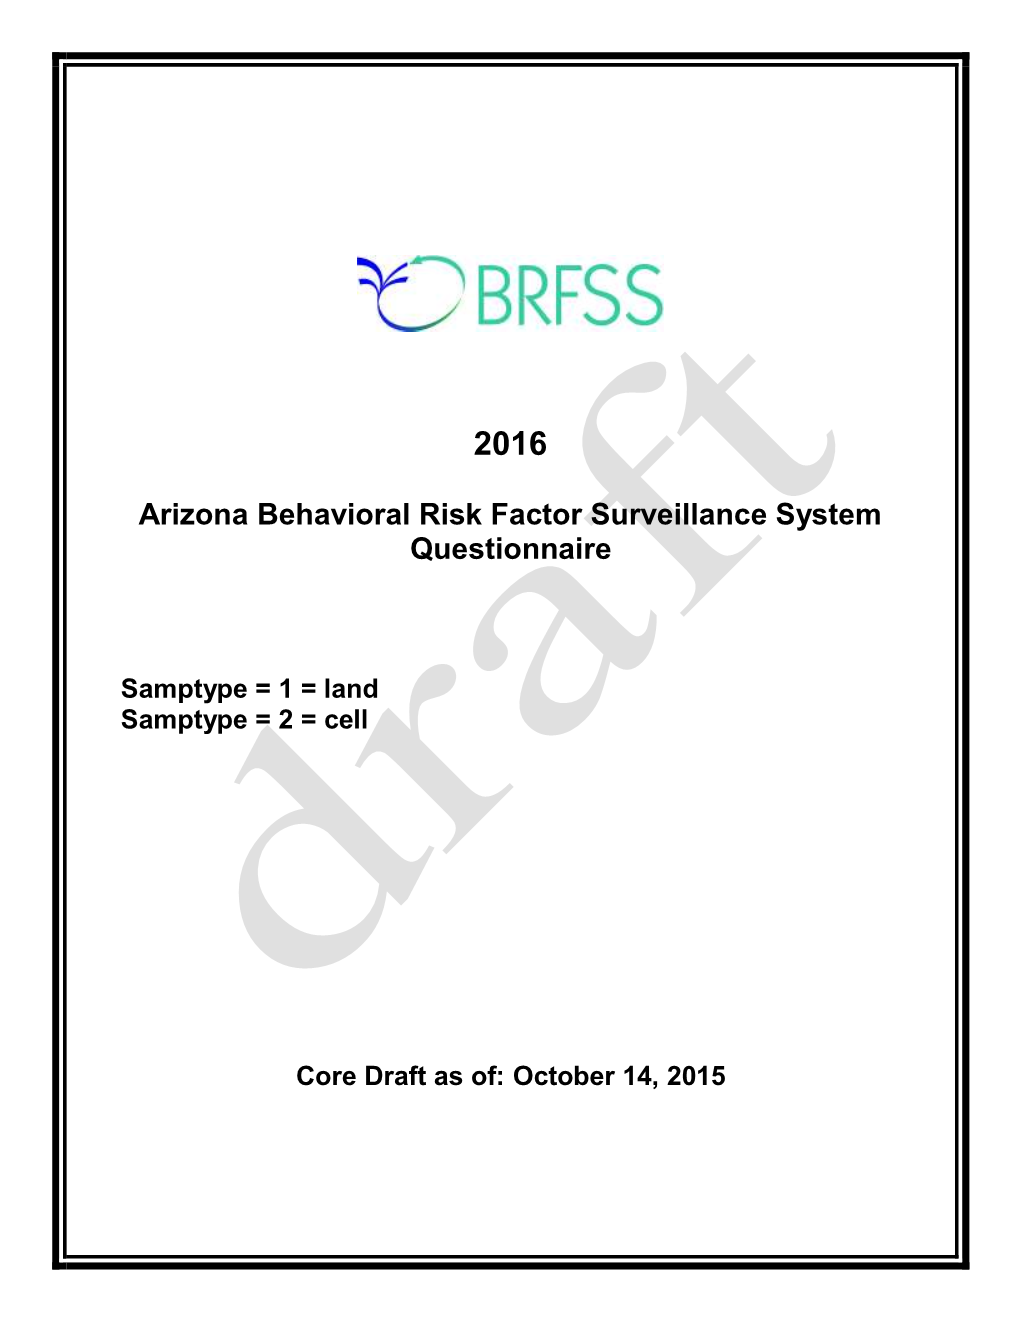 Arizona Behavioral Risk Factor Surveillance System Questionnaire